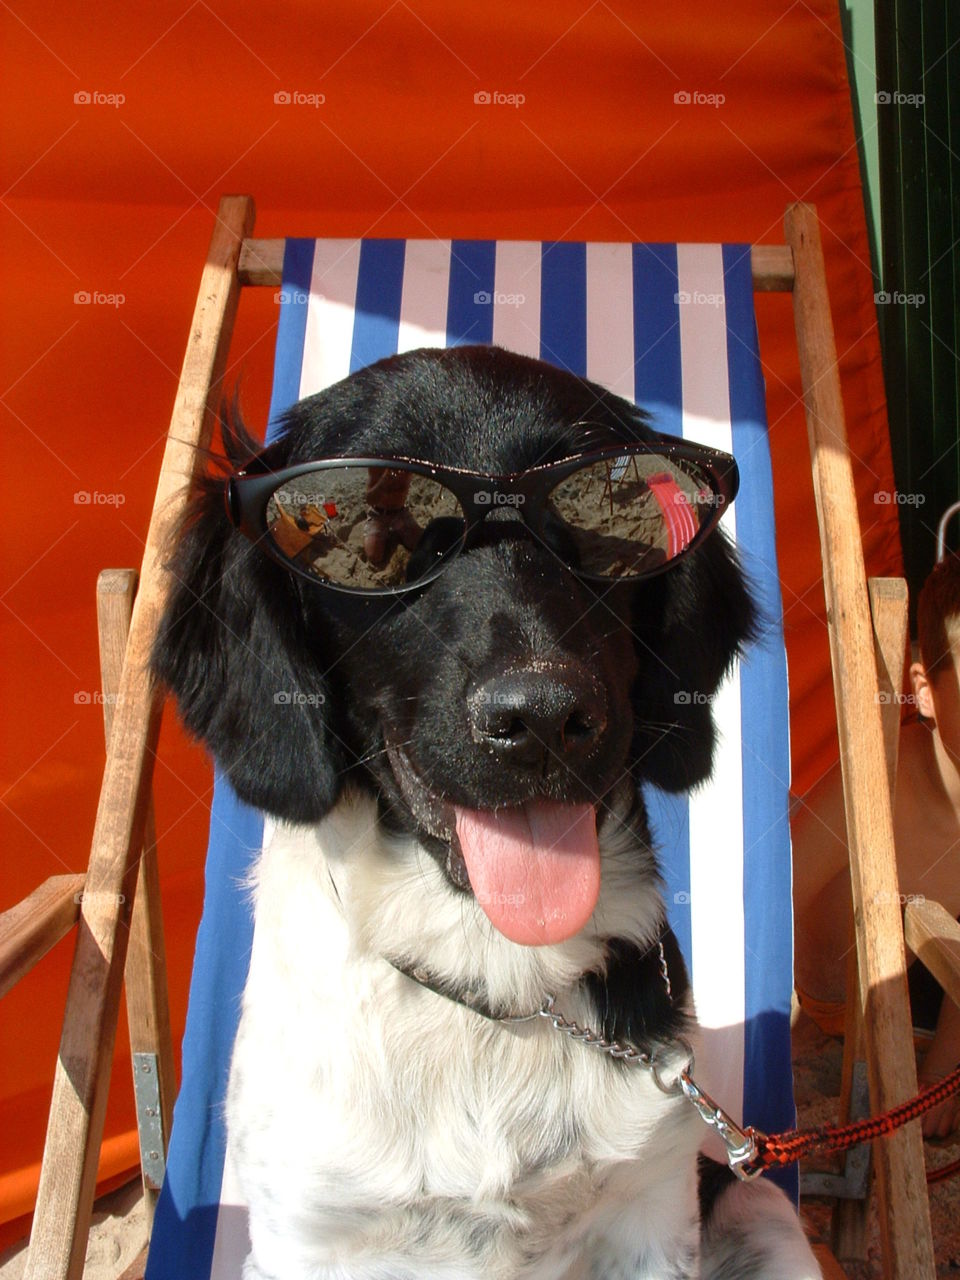 Friese stabij dog. Enjoying the sun at the beach. 